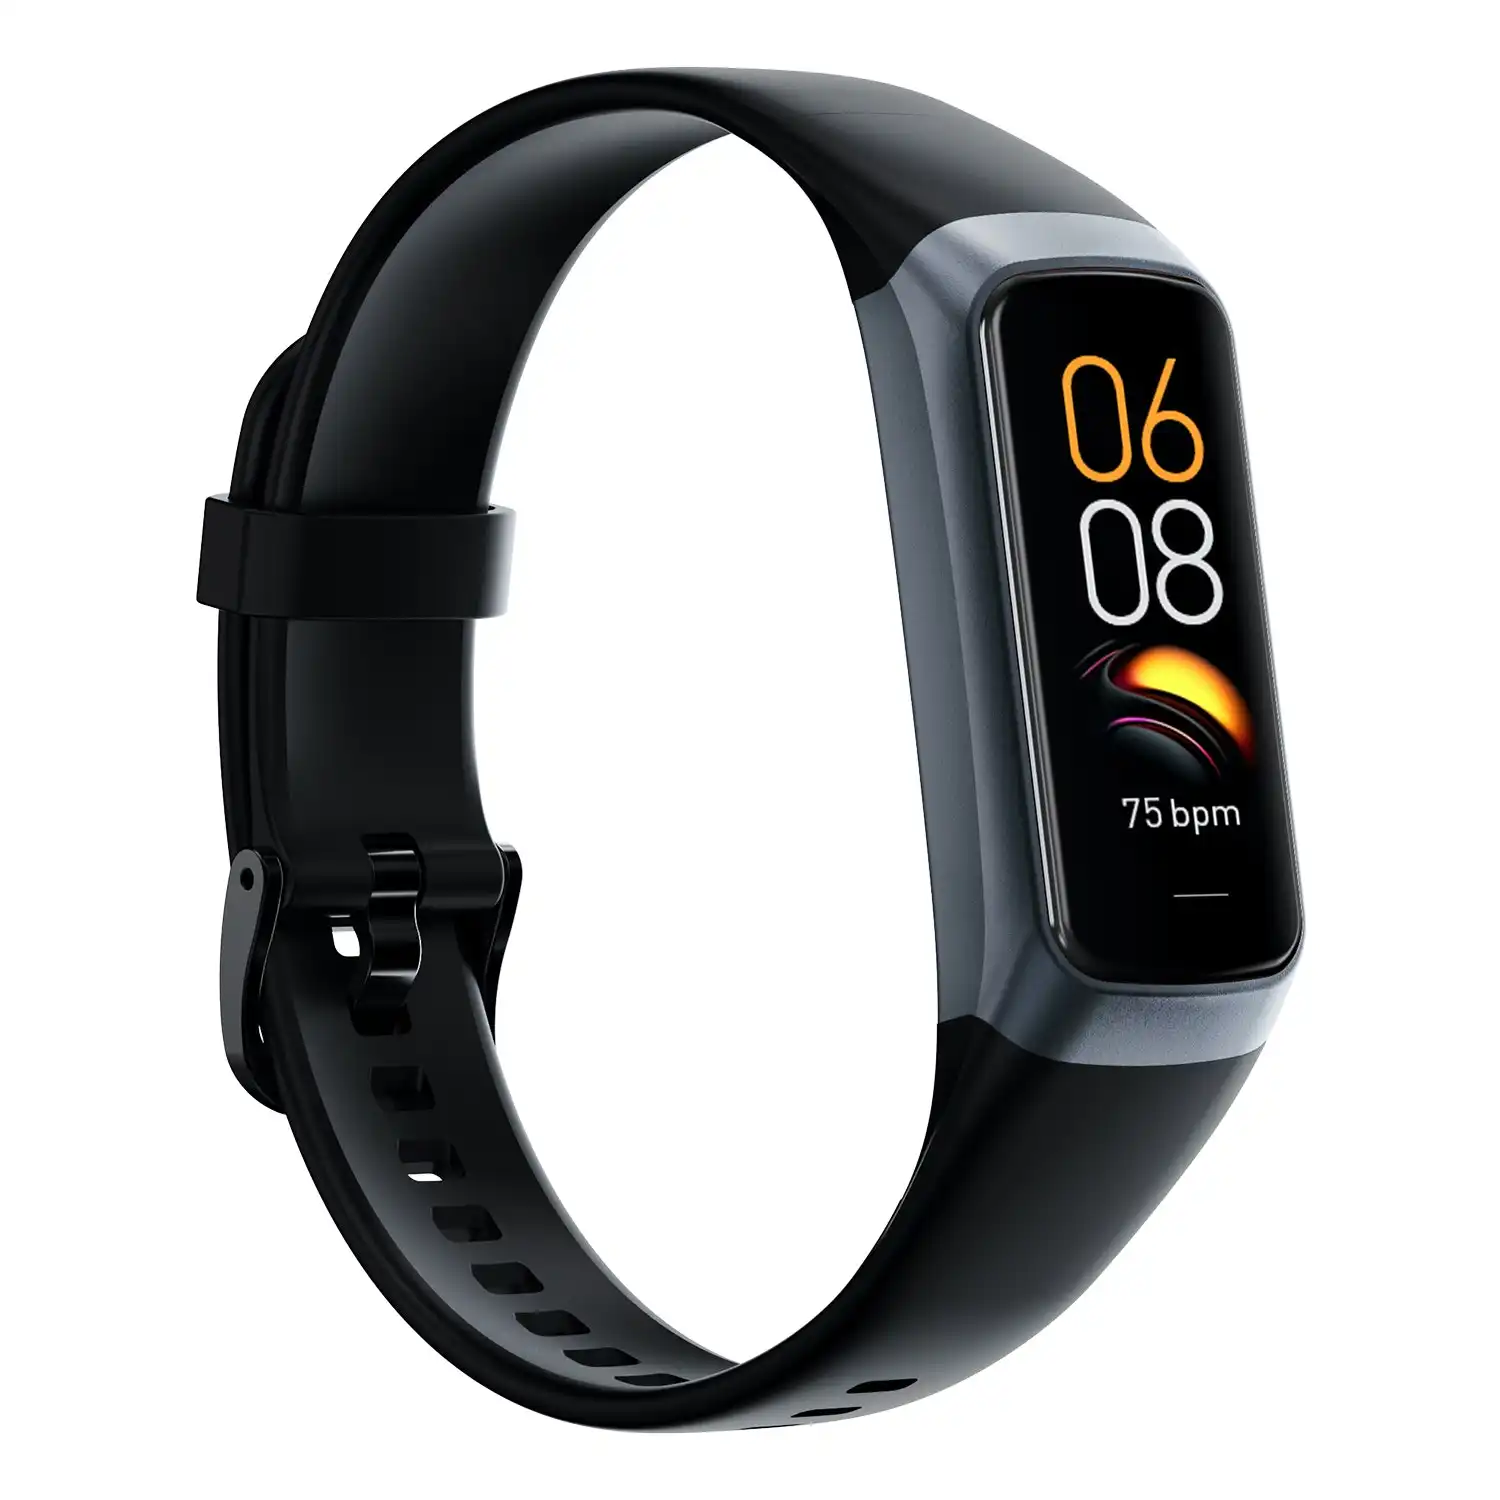 TODO Fitness Tracker Smart Watch BT 5.0 Body Thermometer Temperature BPM Monitor - Black